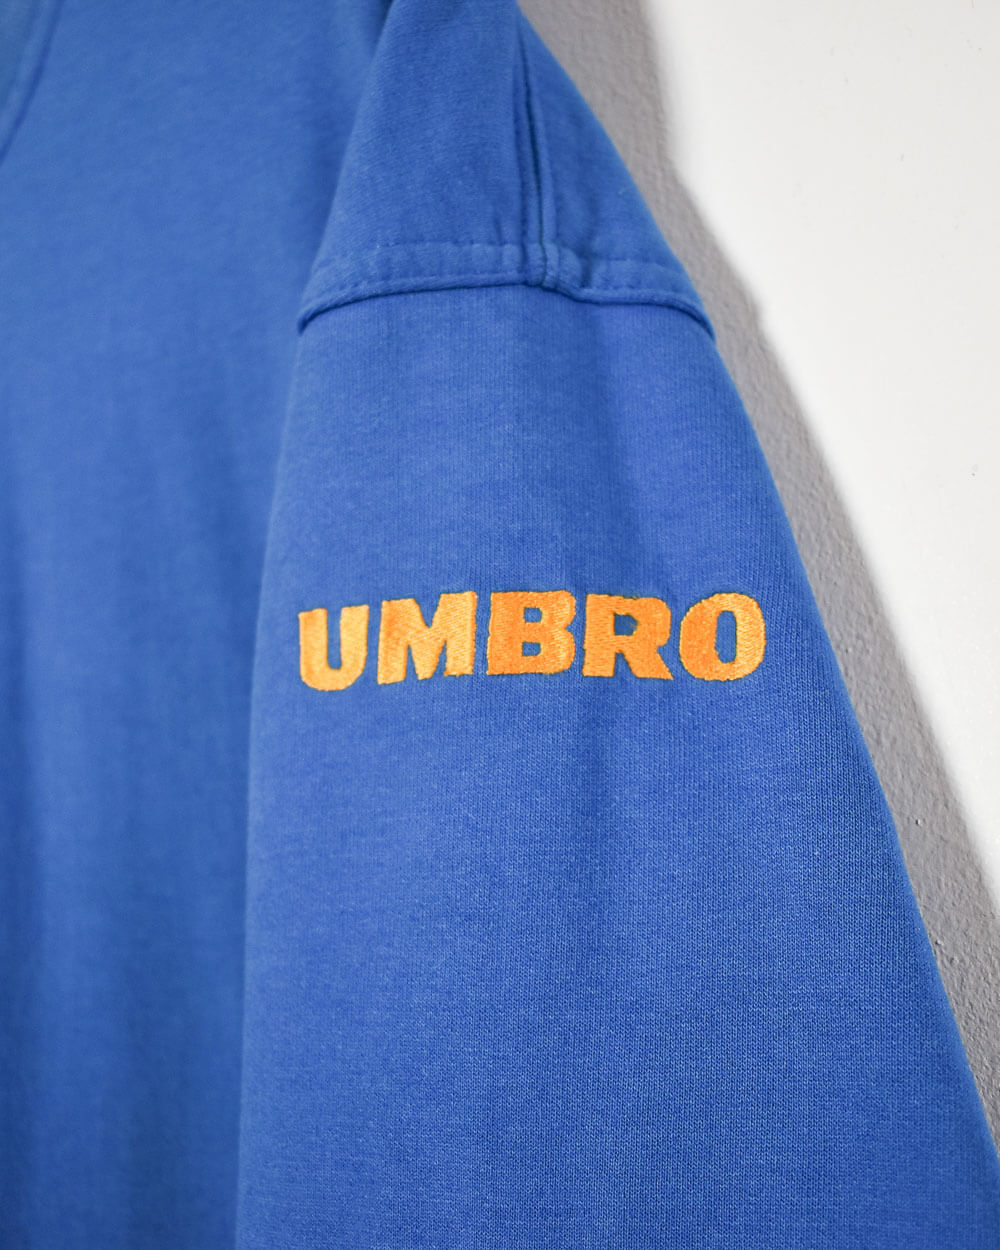 Blue Umbro Sweatshirt - Small